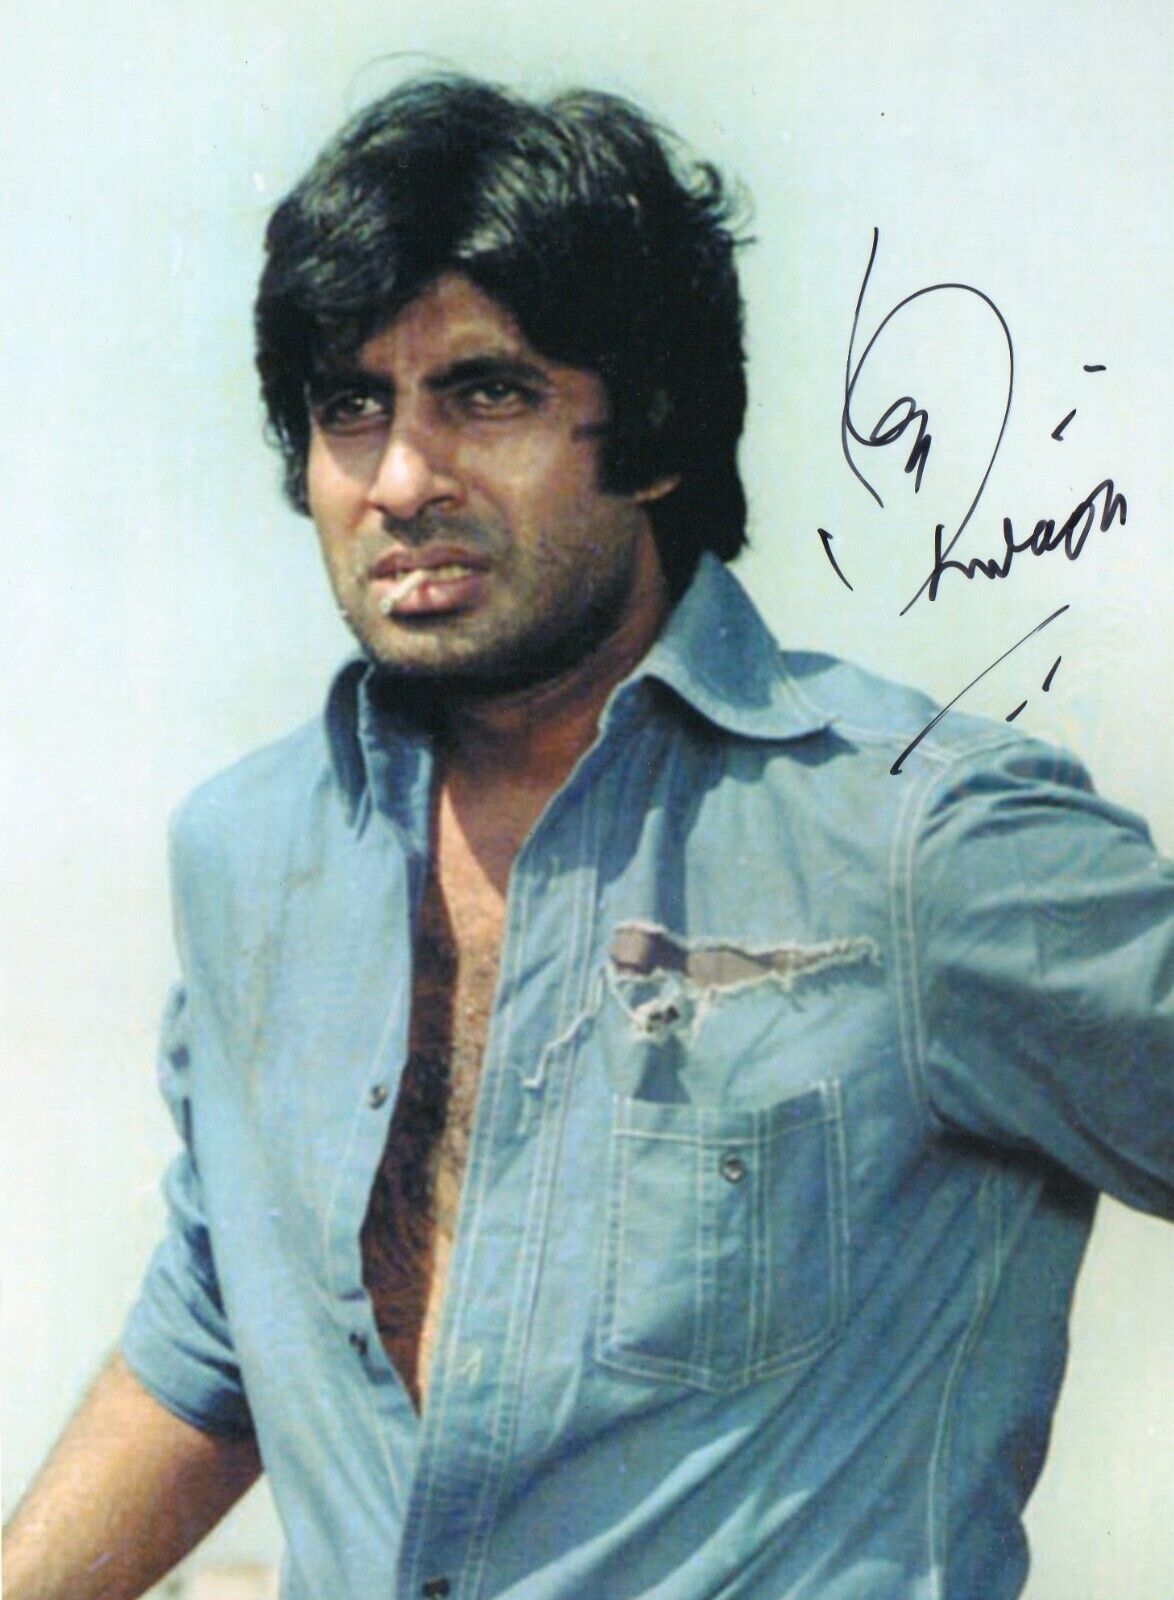 5x7 Original Autographed Photo of Indian Film Actor Amitabh Bachchan